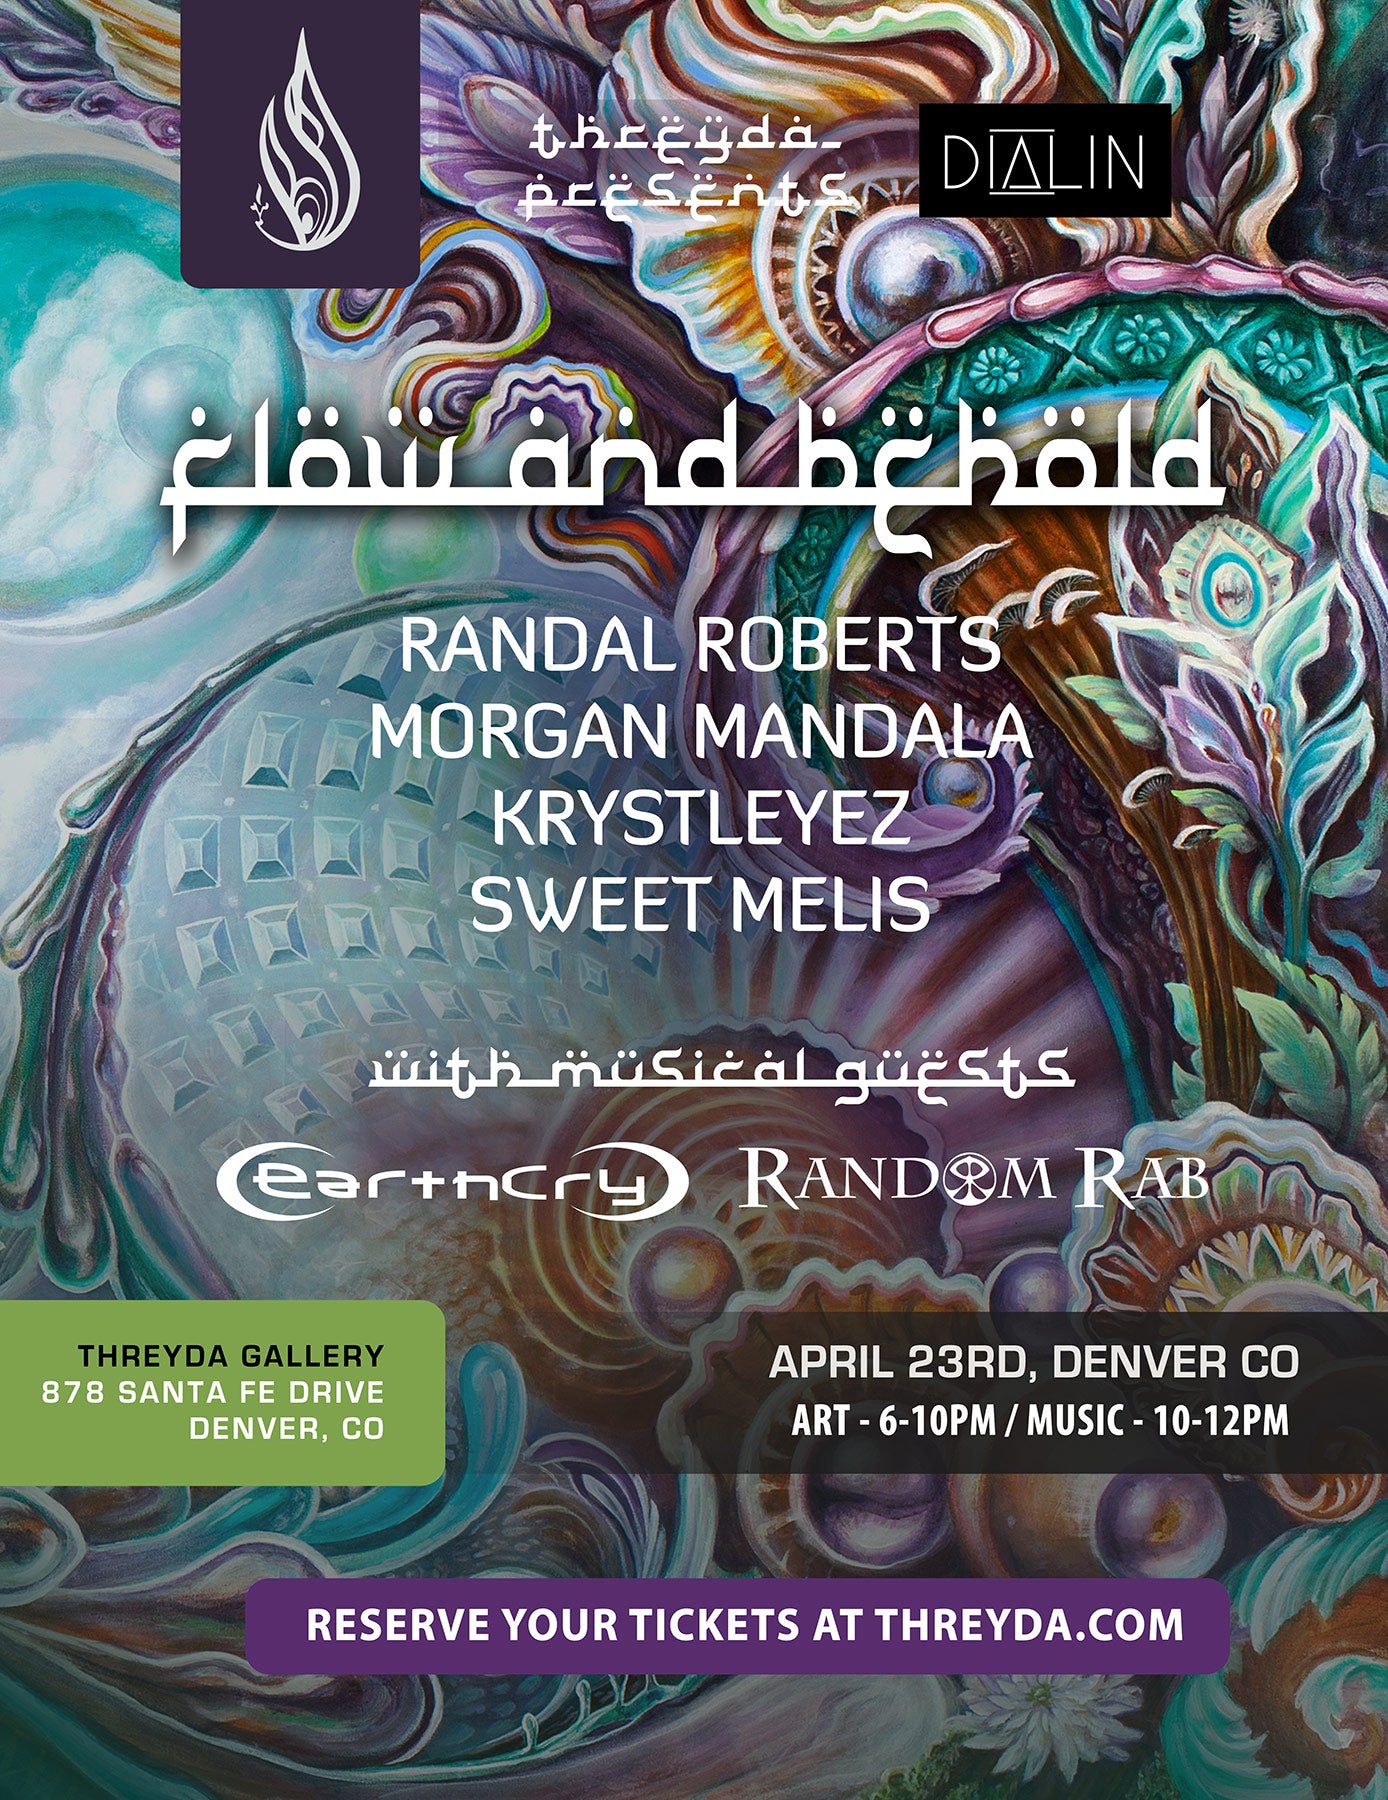 FLOW AND BEHOLD Event Ticket - April 23rd, Denver CO